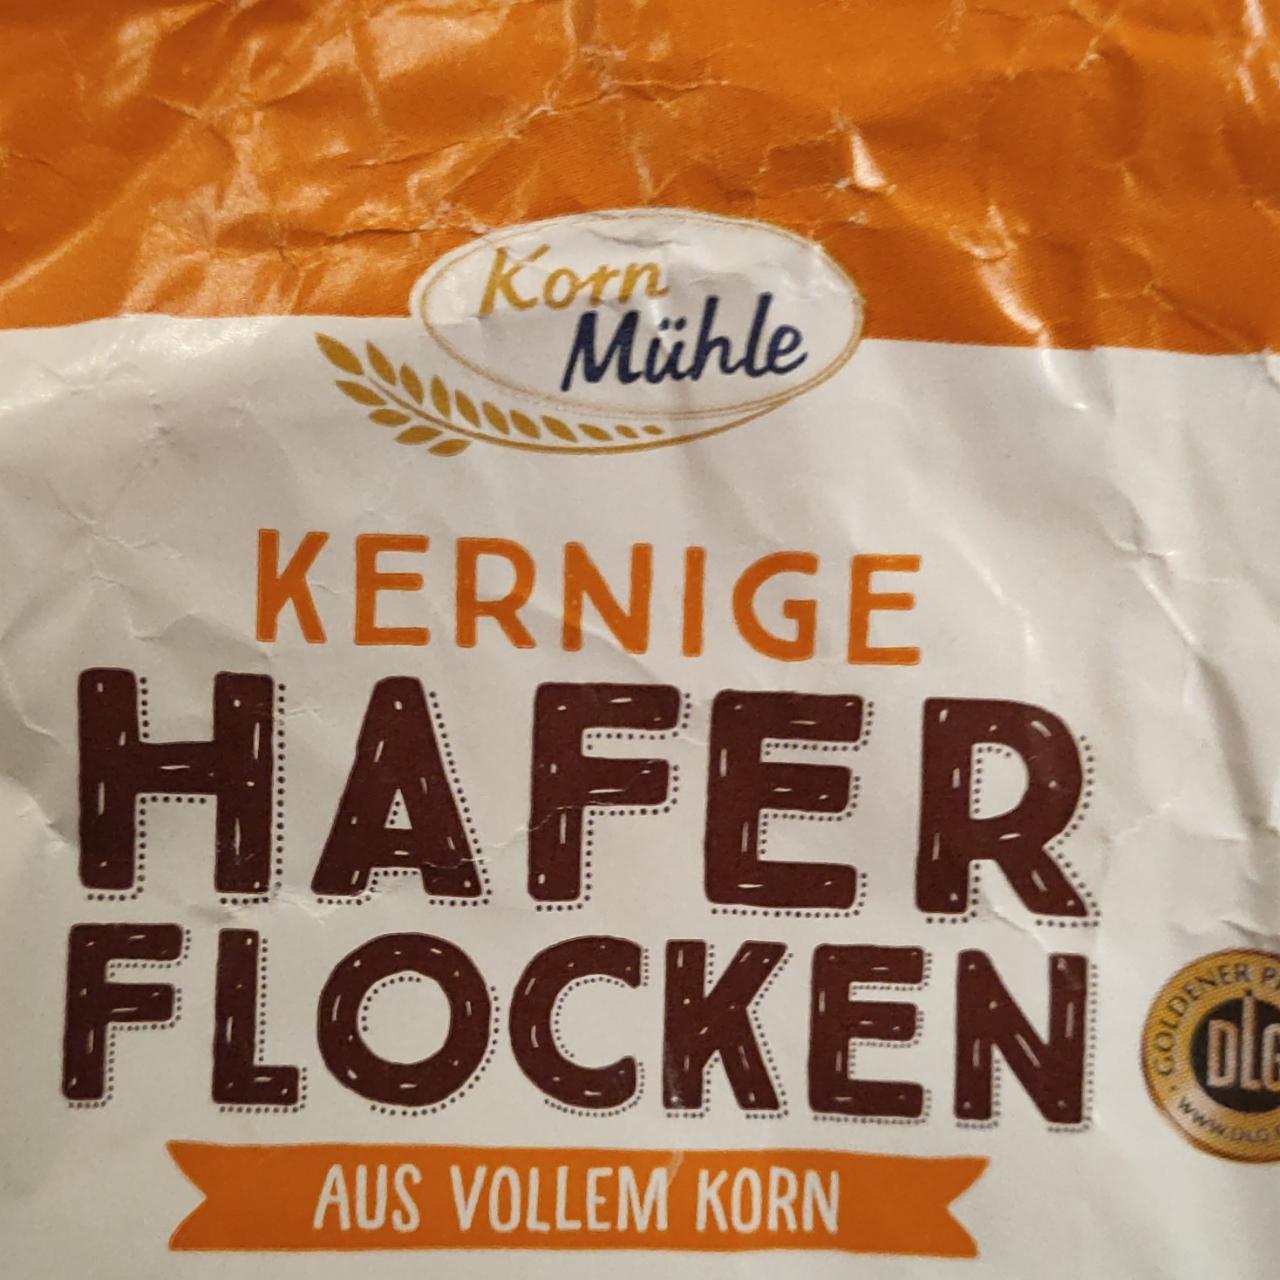 Fotografie - Kernige Hafer Flocken Korn Mühle